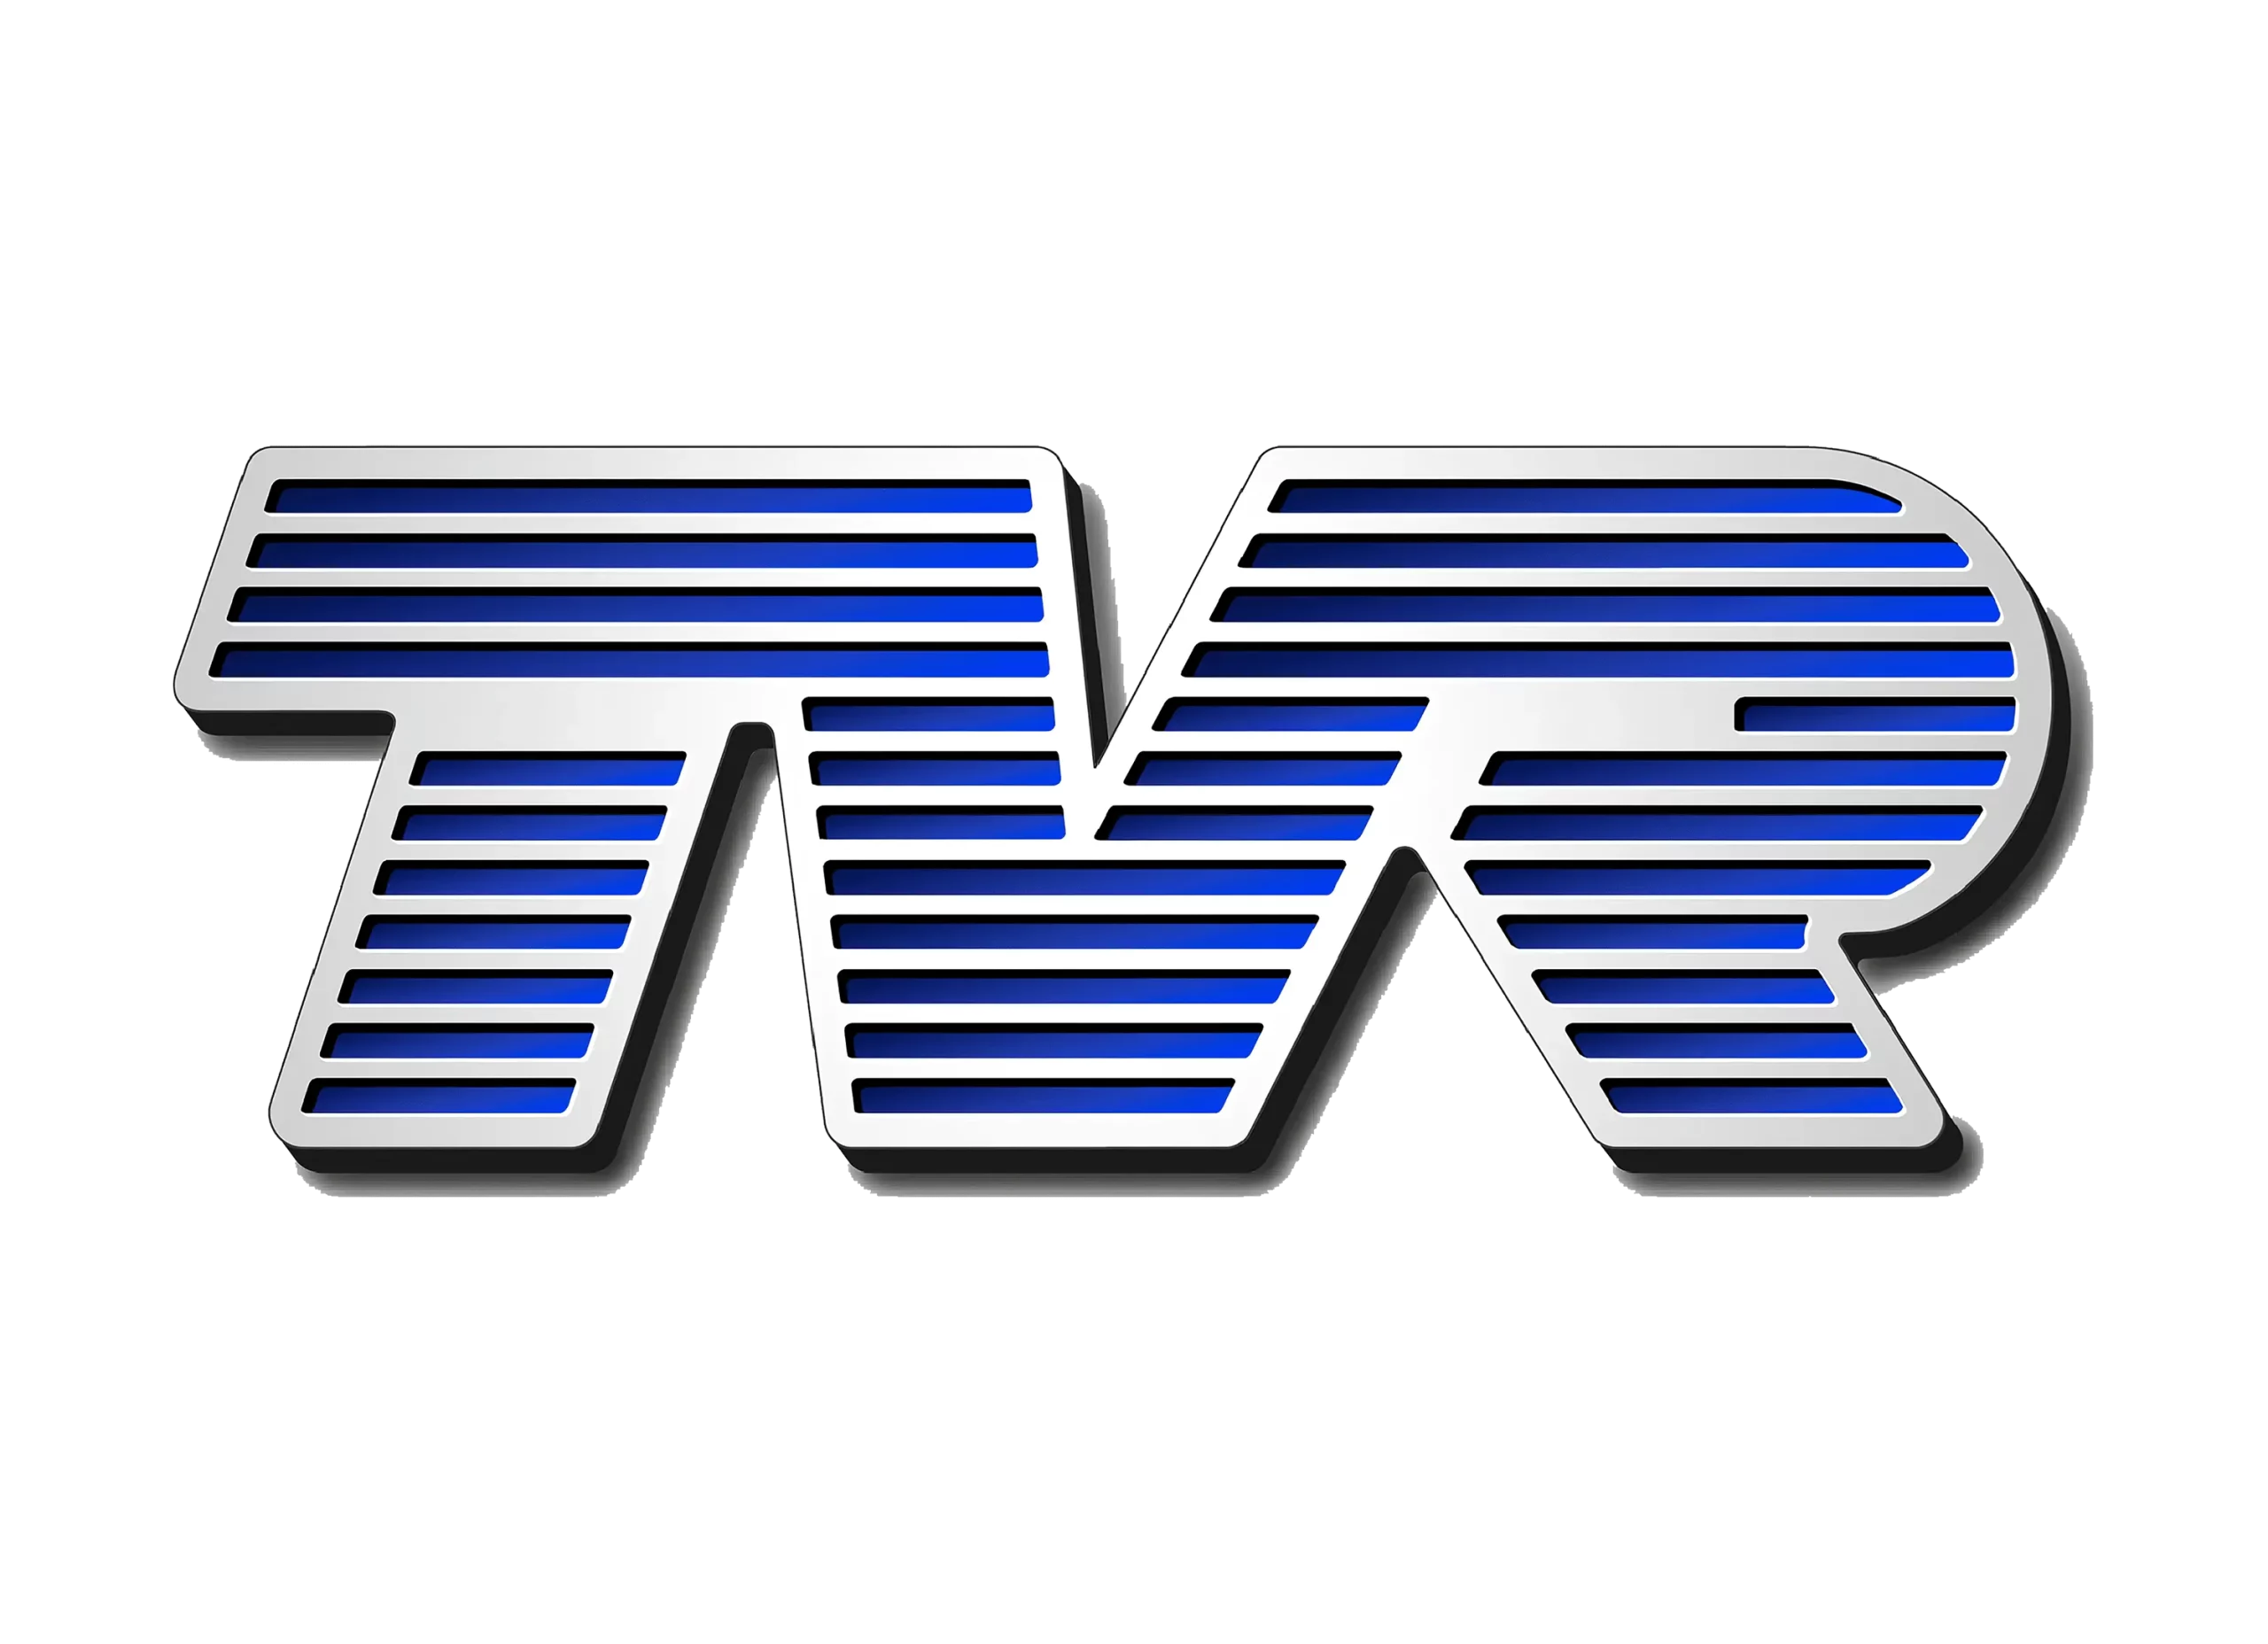 TVR logo 1961-2010